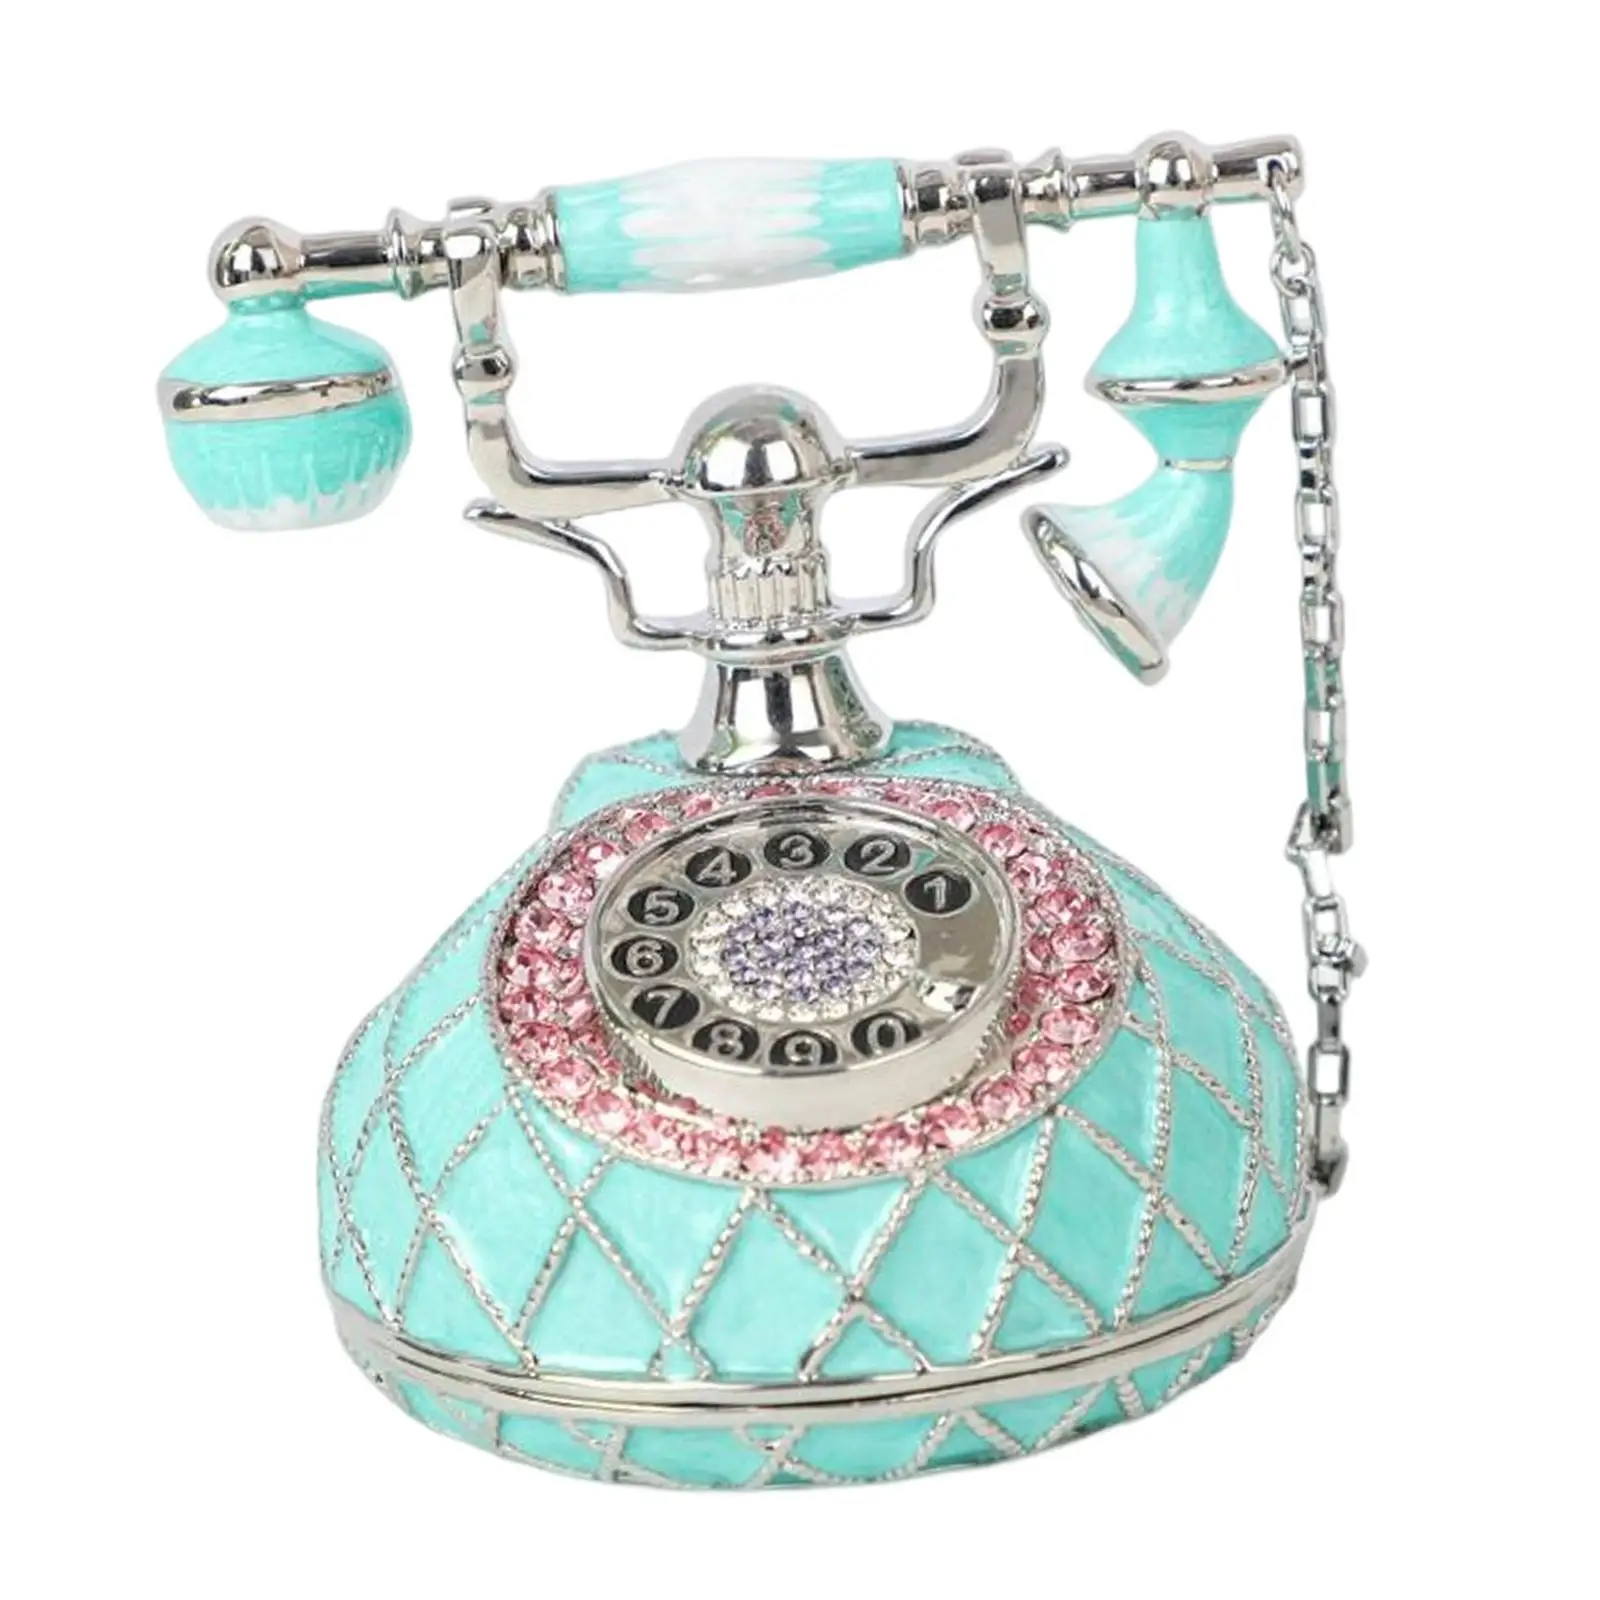 Retro Style Telephone Figurine Jewelry Trinket Box Keepsake Gift Ornaments Enameled Treasure Chest for Earrings Rings Bracelet